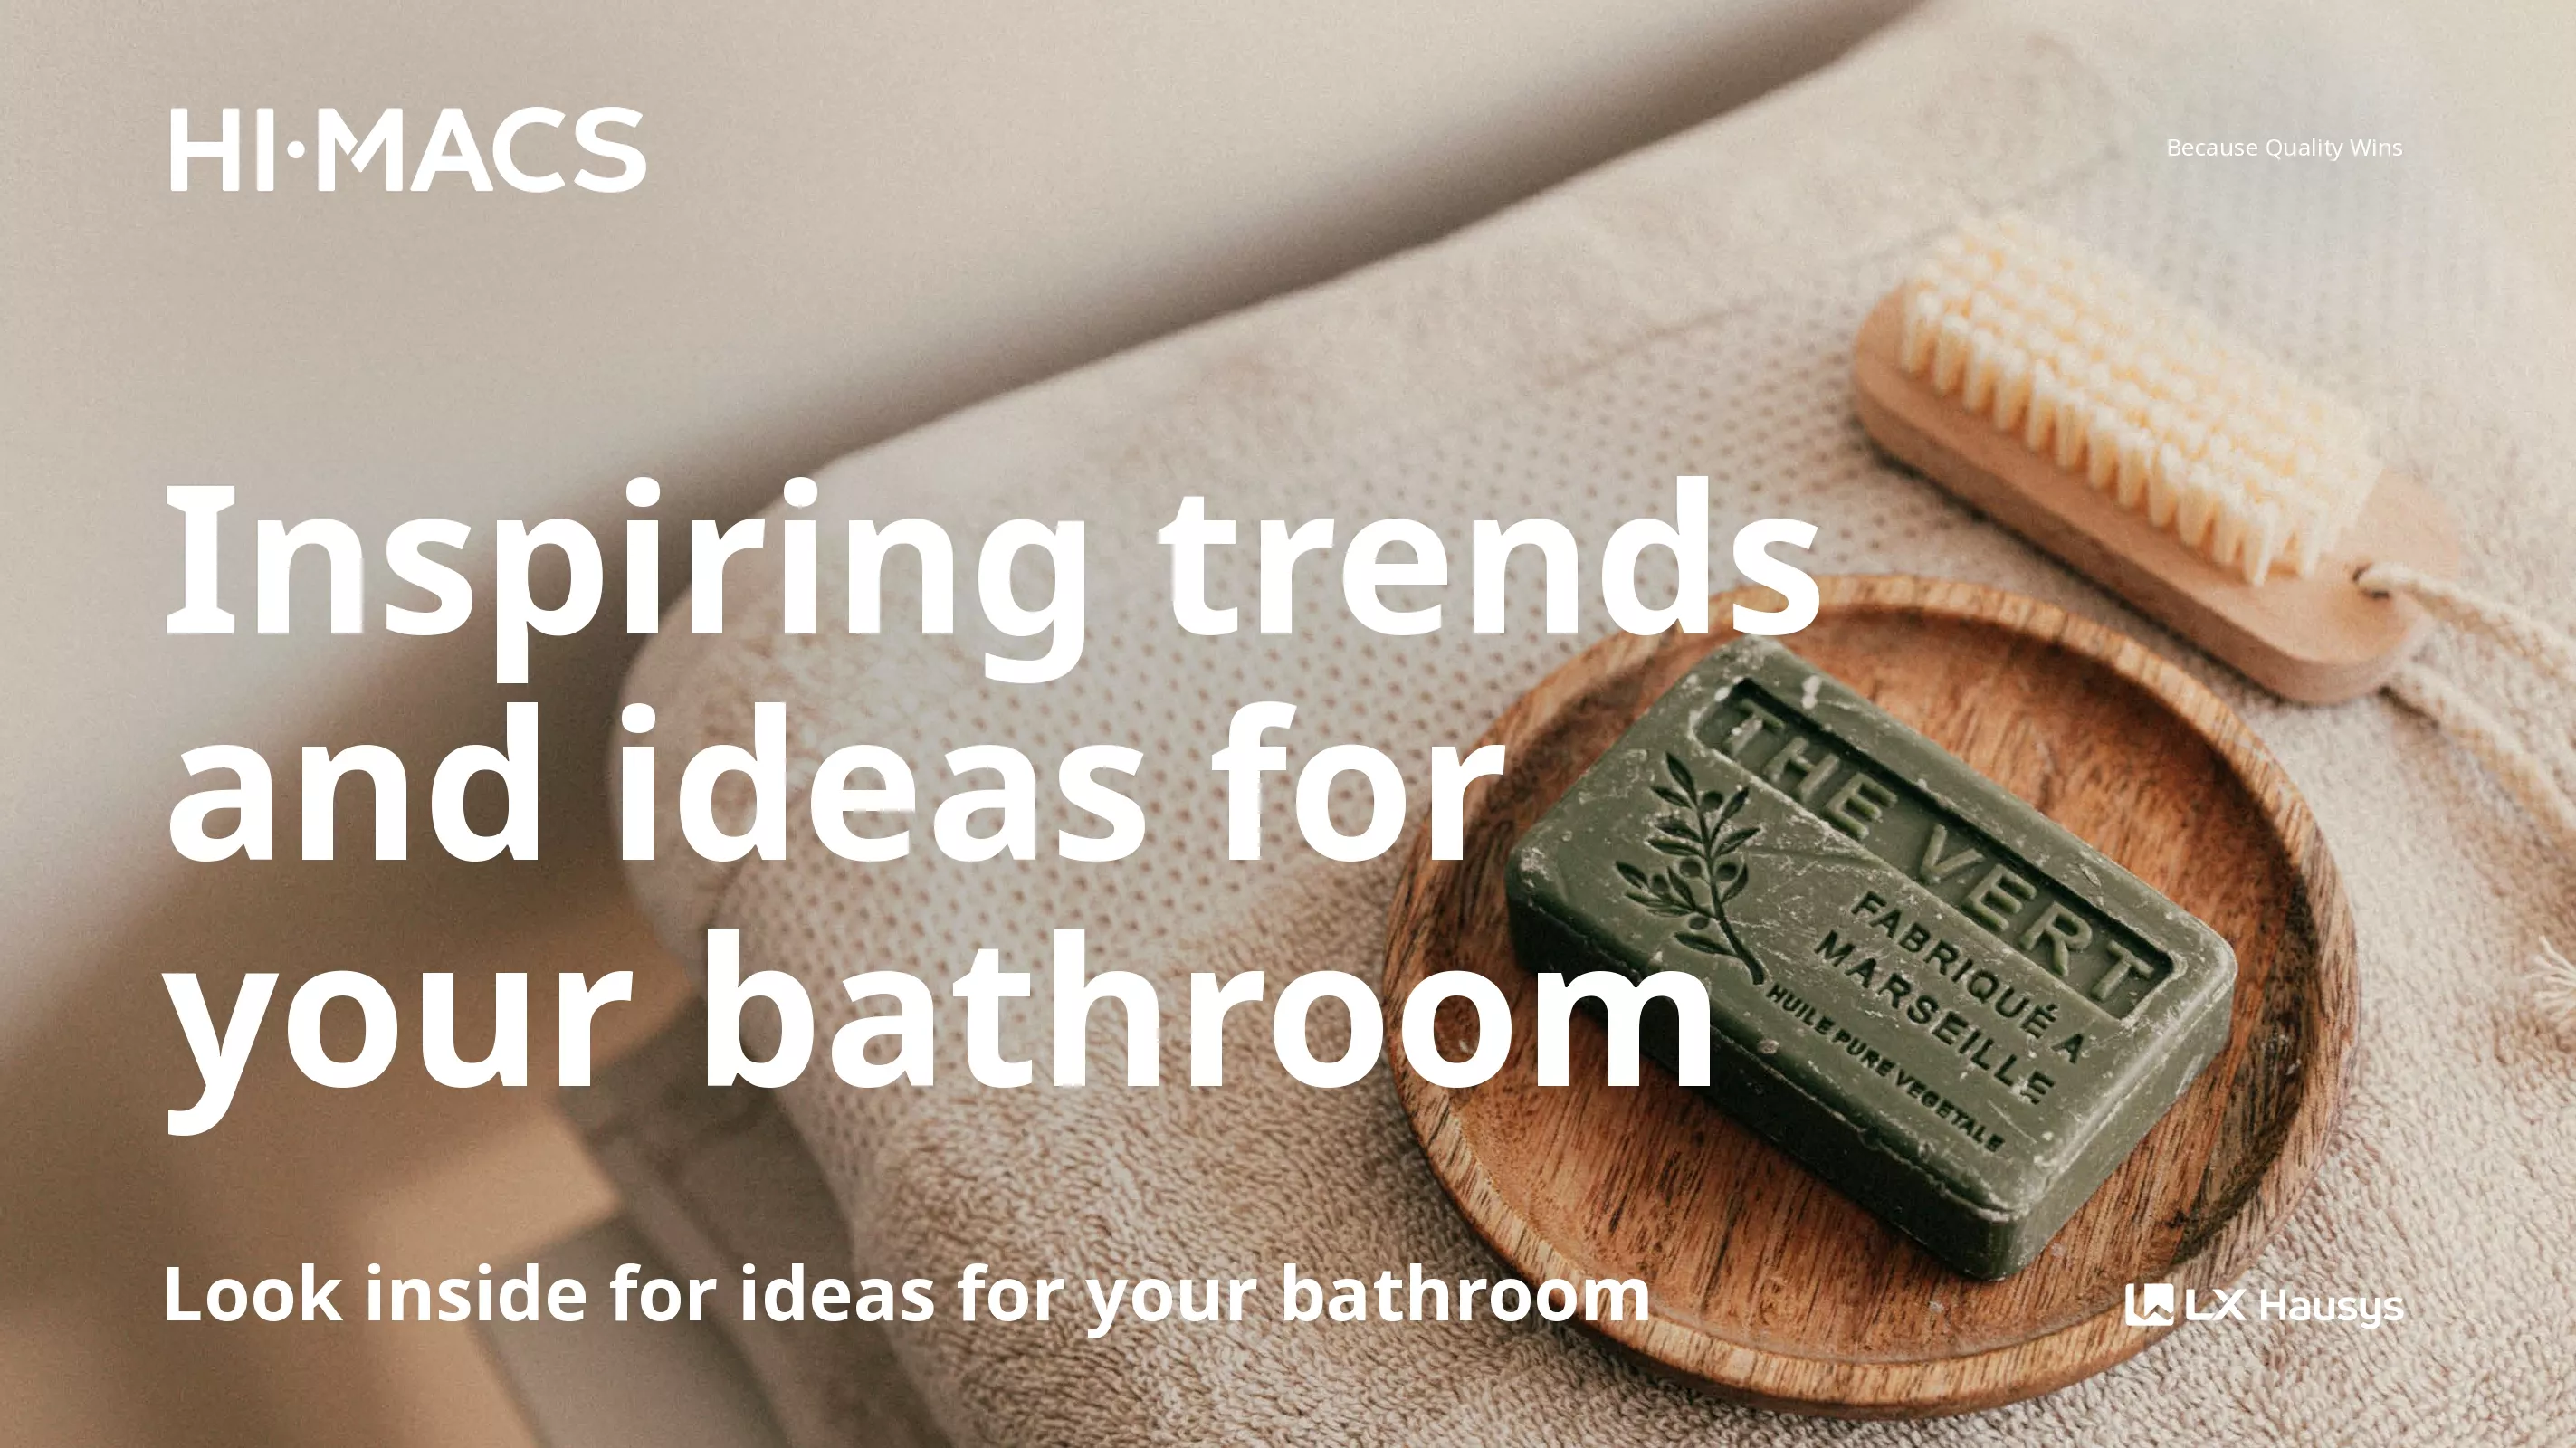 HIMACS and Marike Andeweg present four new bathroom trends